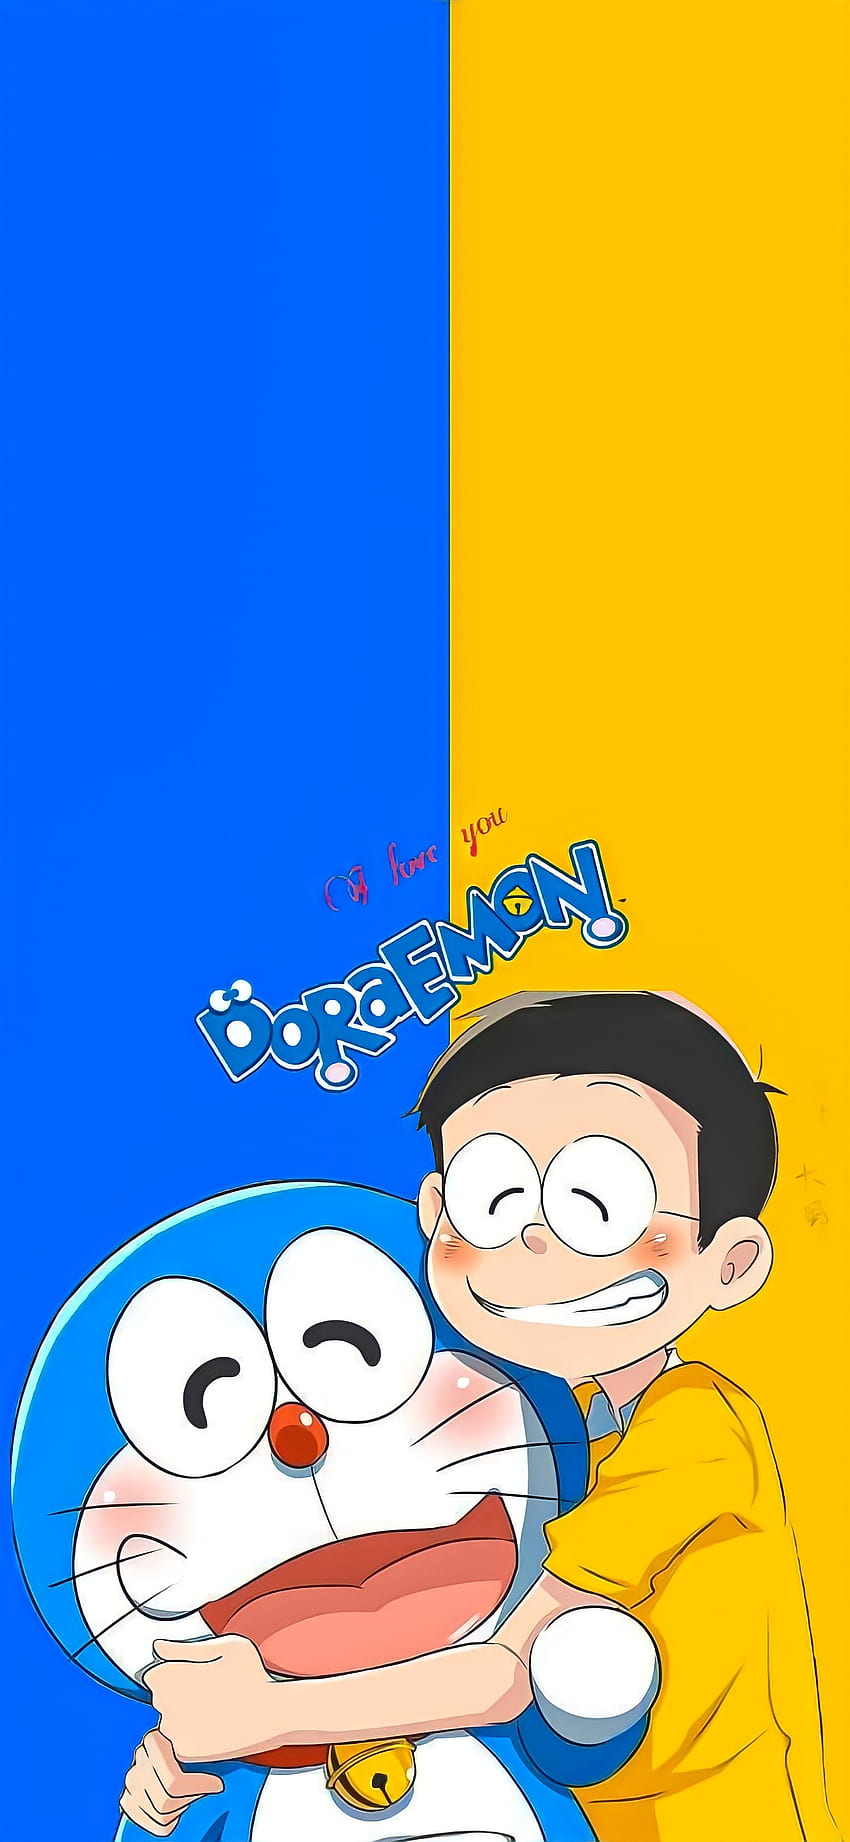 Doraemon Pictures | Download Free Images on Unsplash